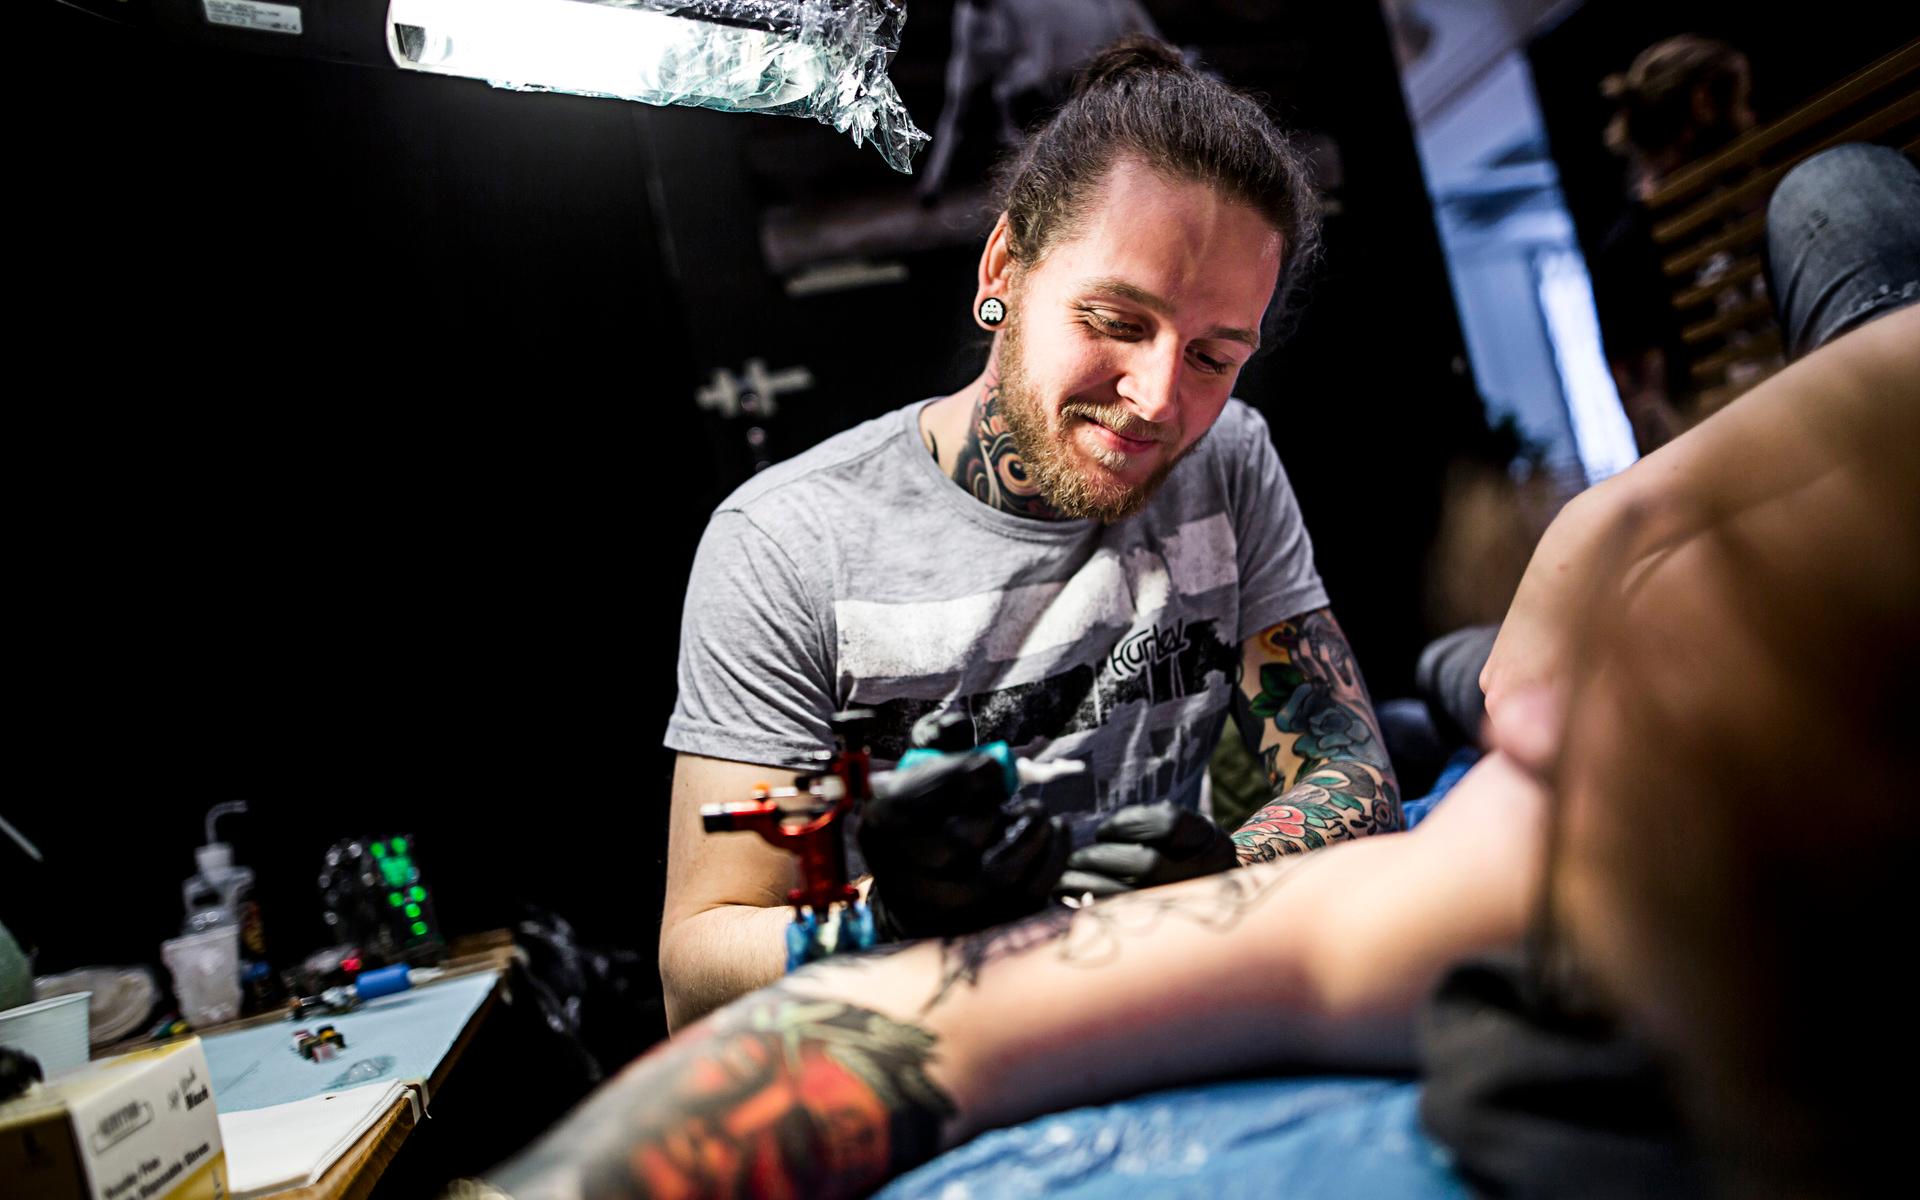 Tatueringsmässa Tattoo MeltdownJacob Wiman Foto: Sebastian Lamotte